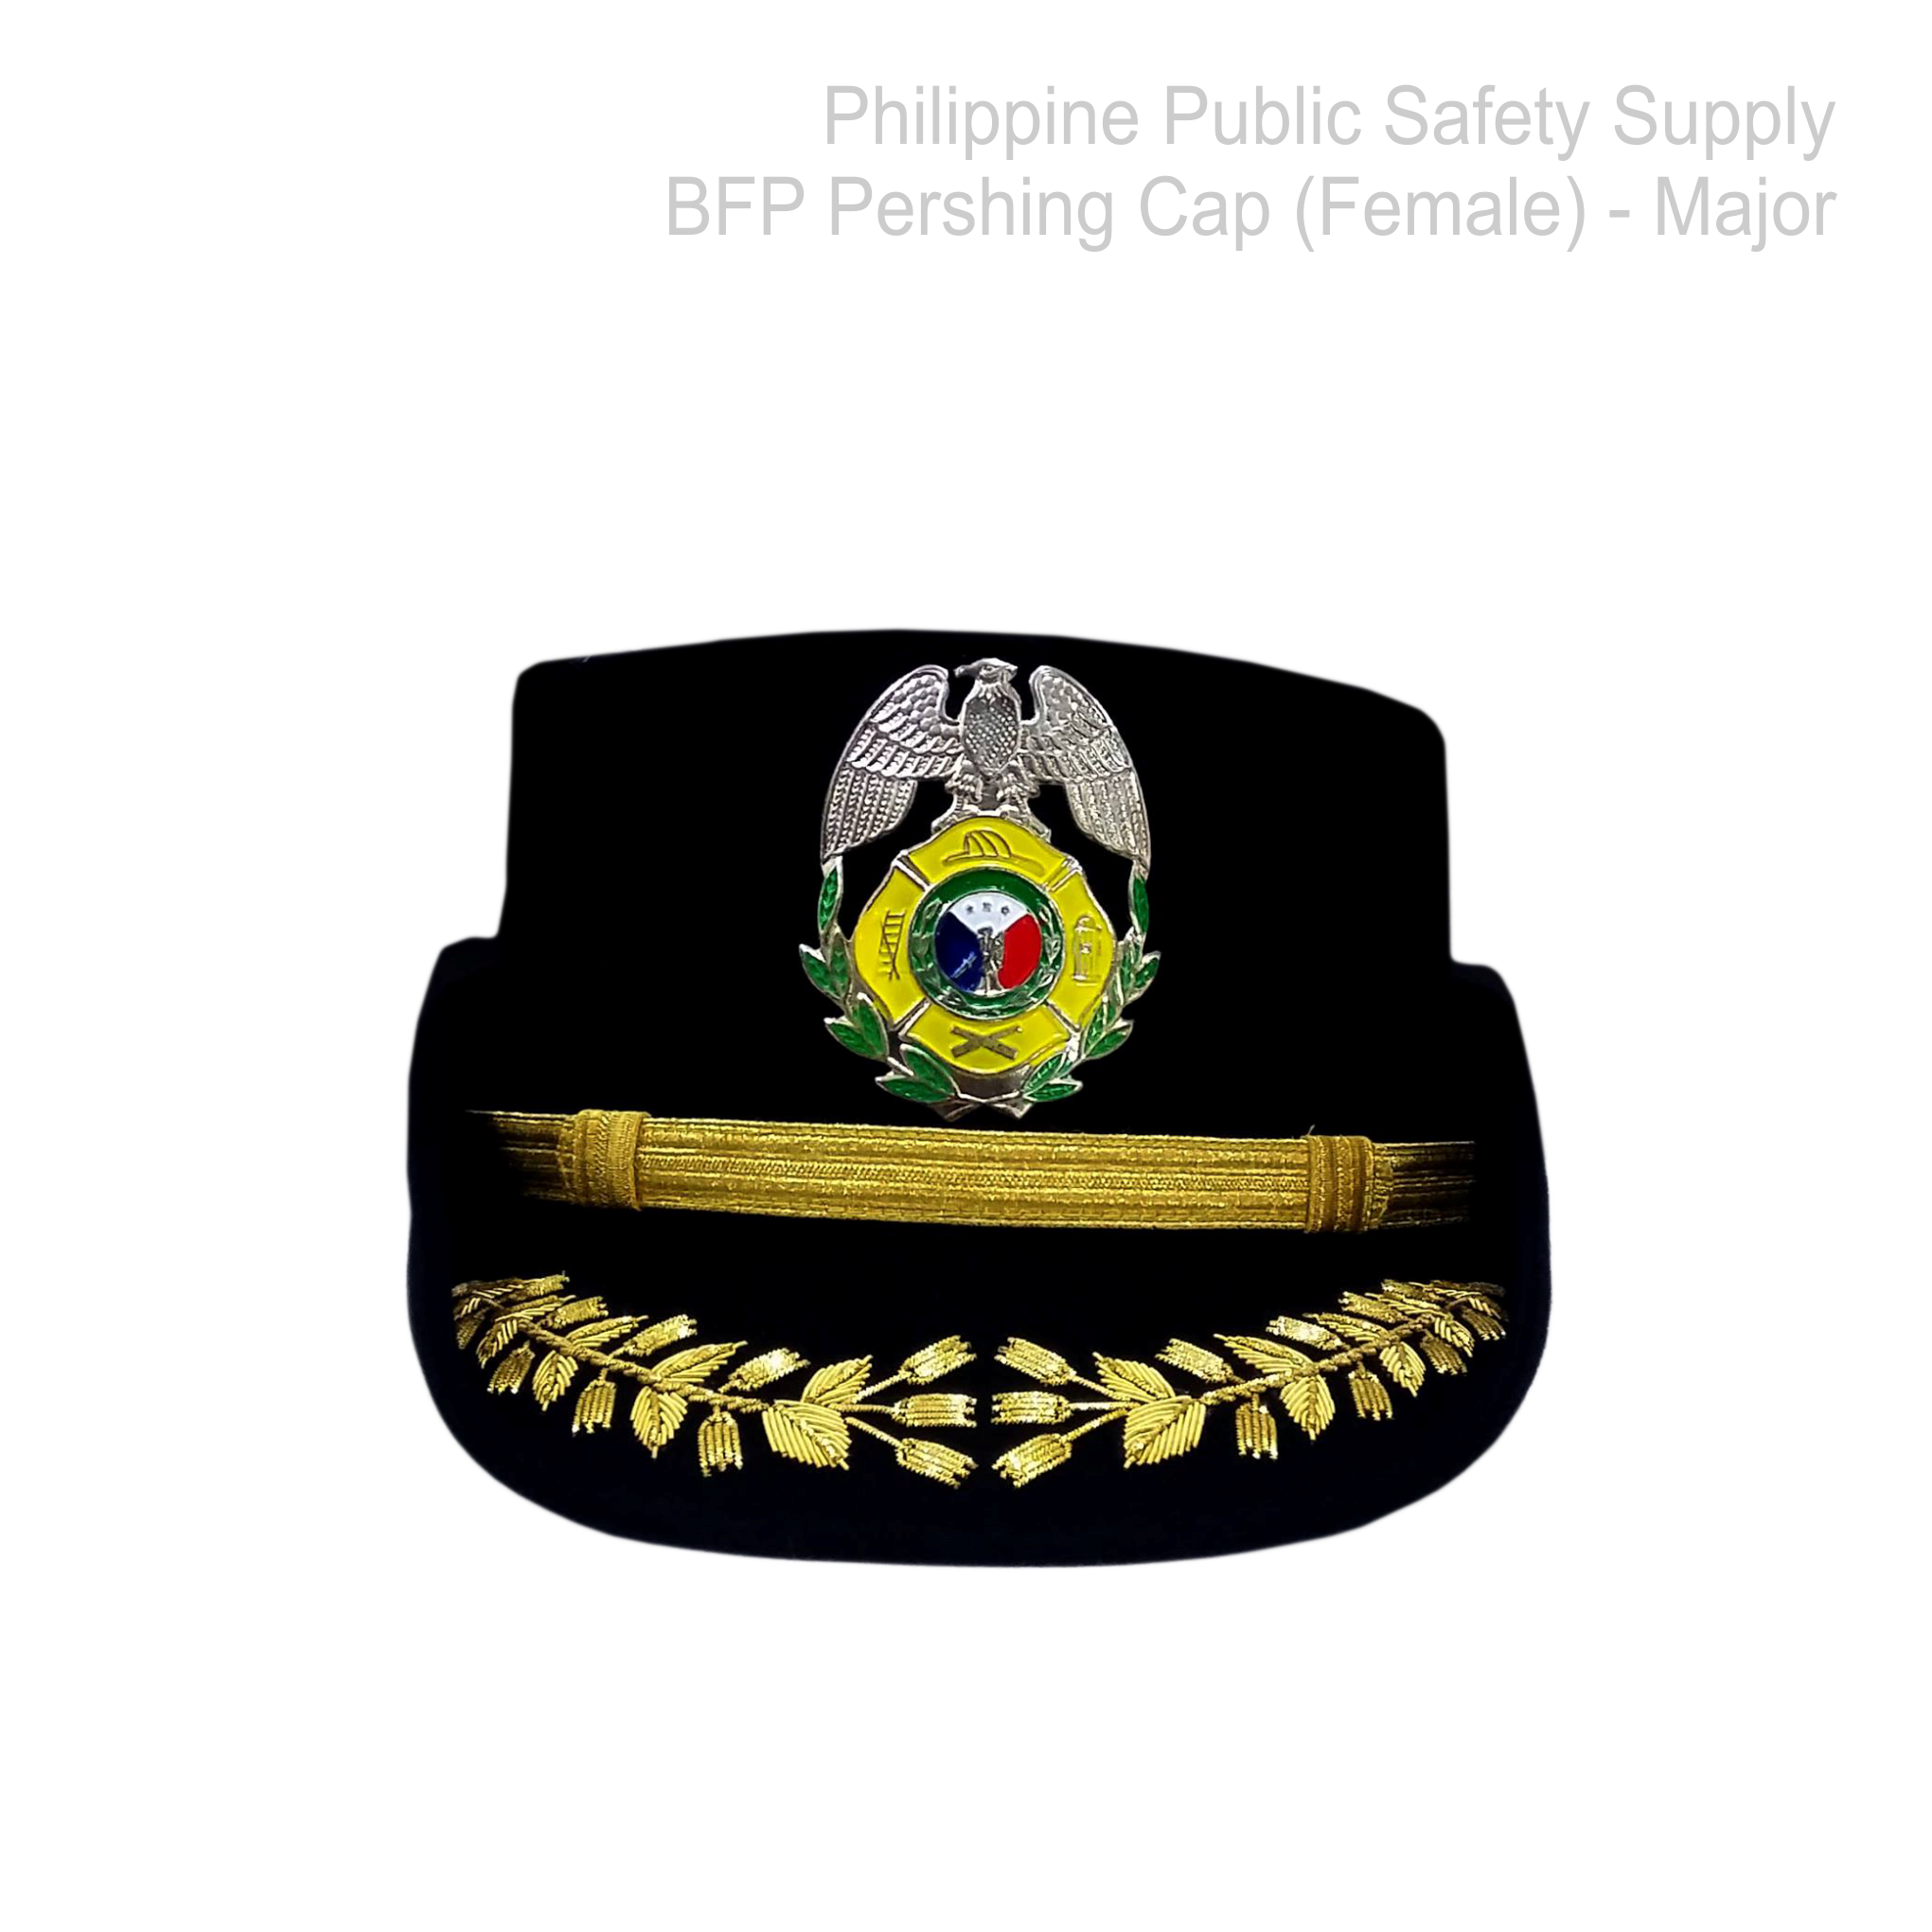 Bureau of Fire Protection (BFP) Pershing Cap (Female) Major - BFP